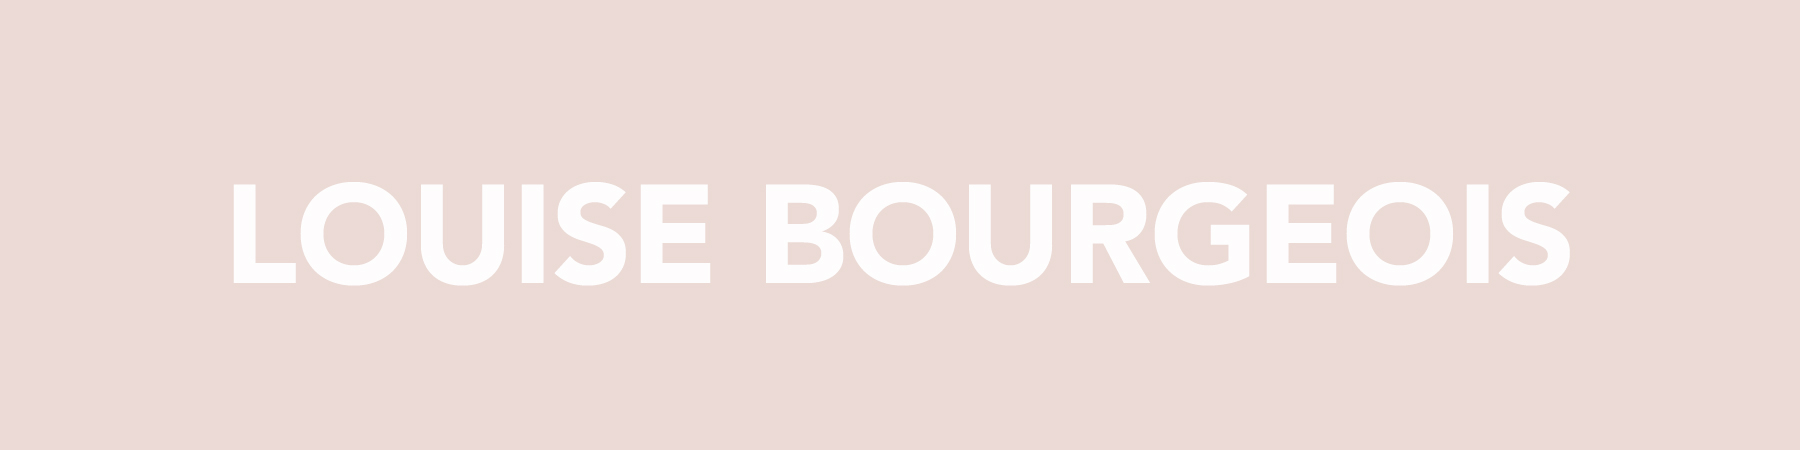 Louise Bourgeois Prints